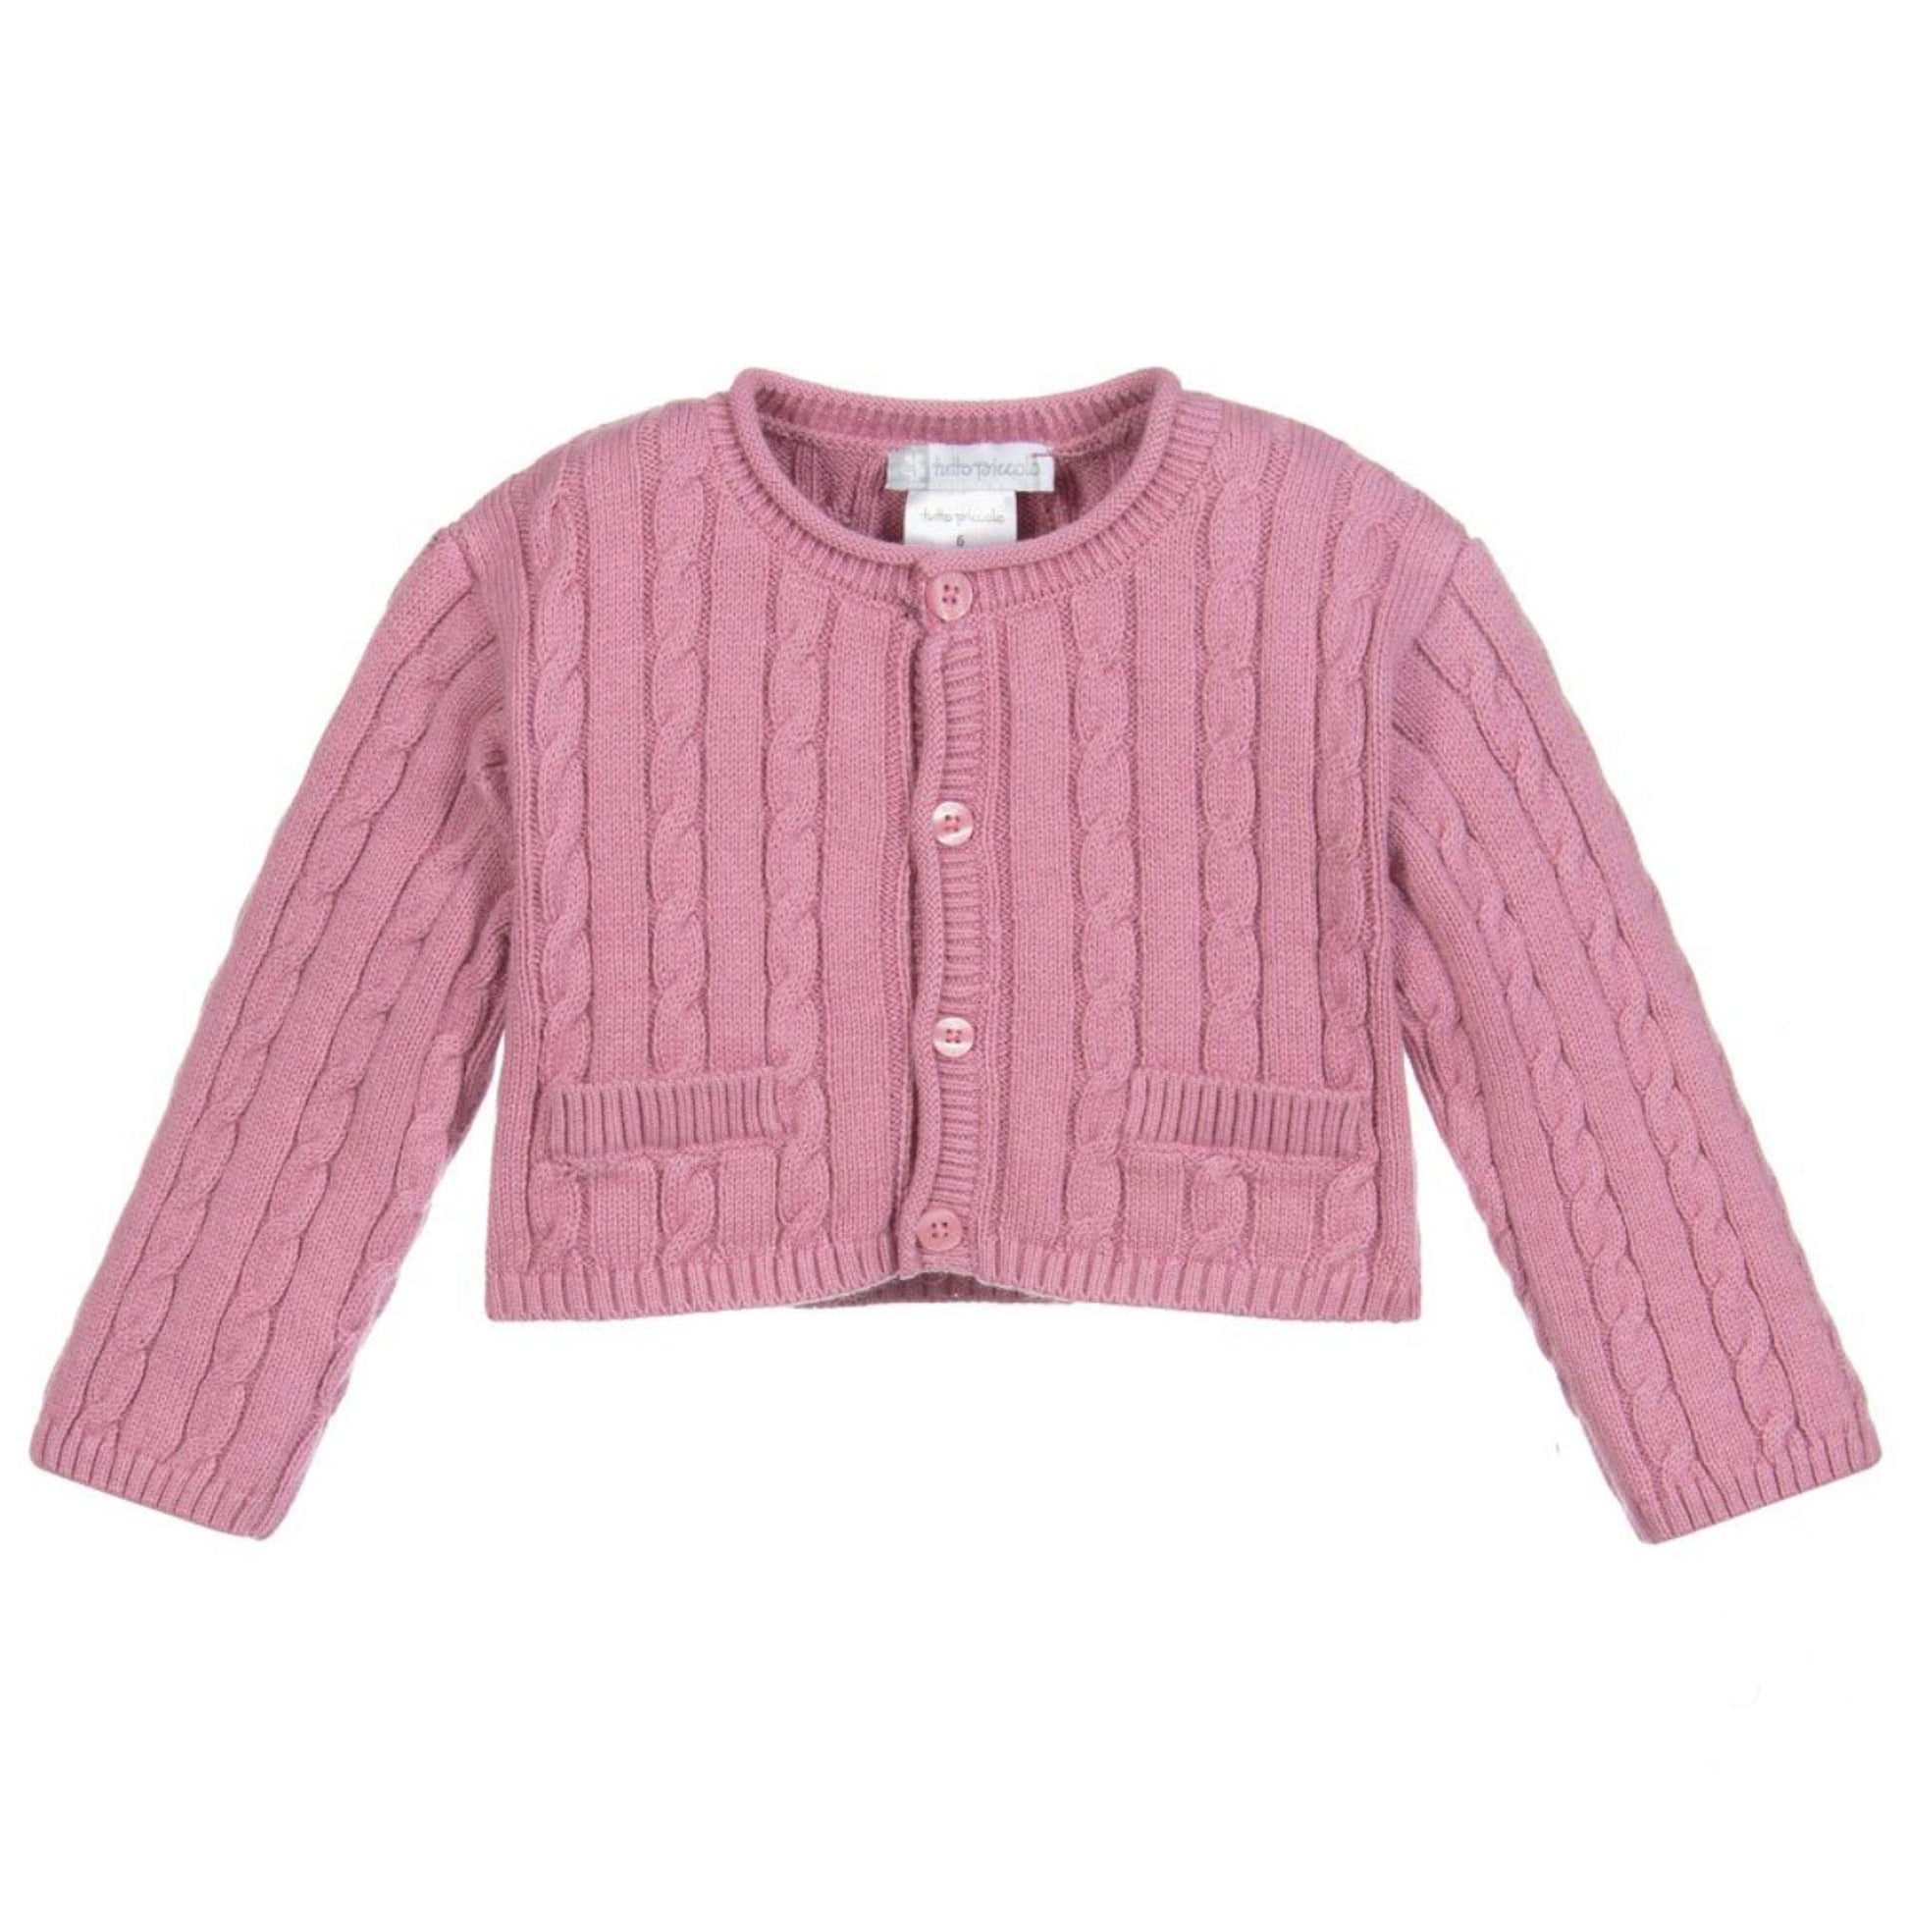 Mauve Knitted Cotton Cardigan - Petite Maison Kids